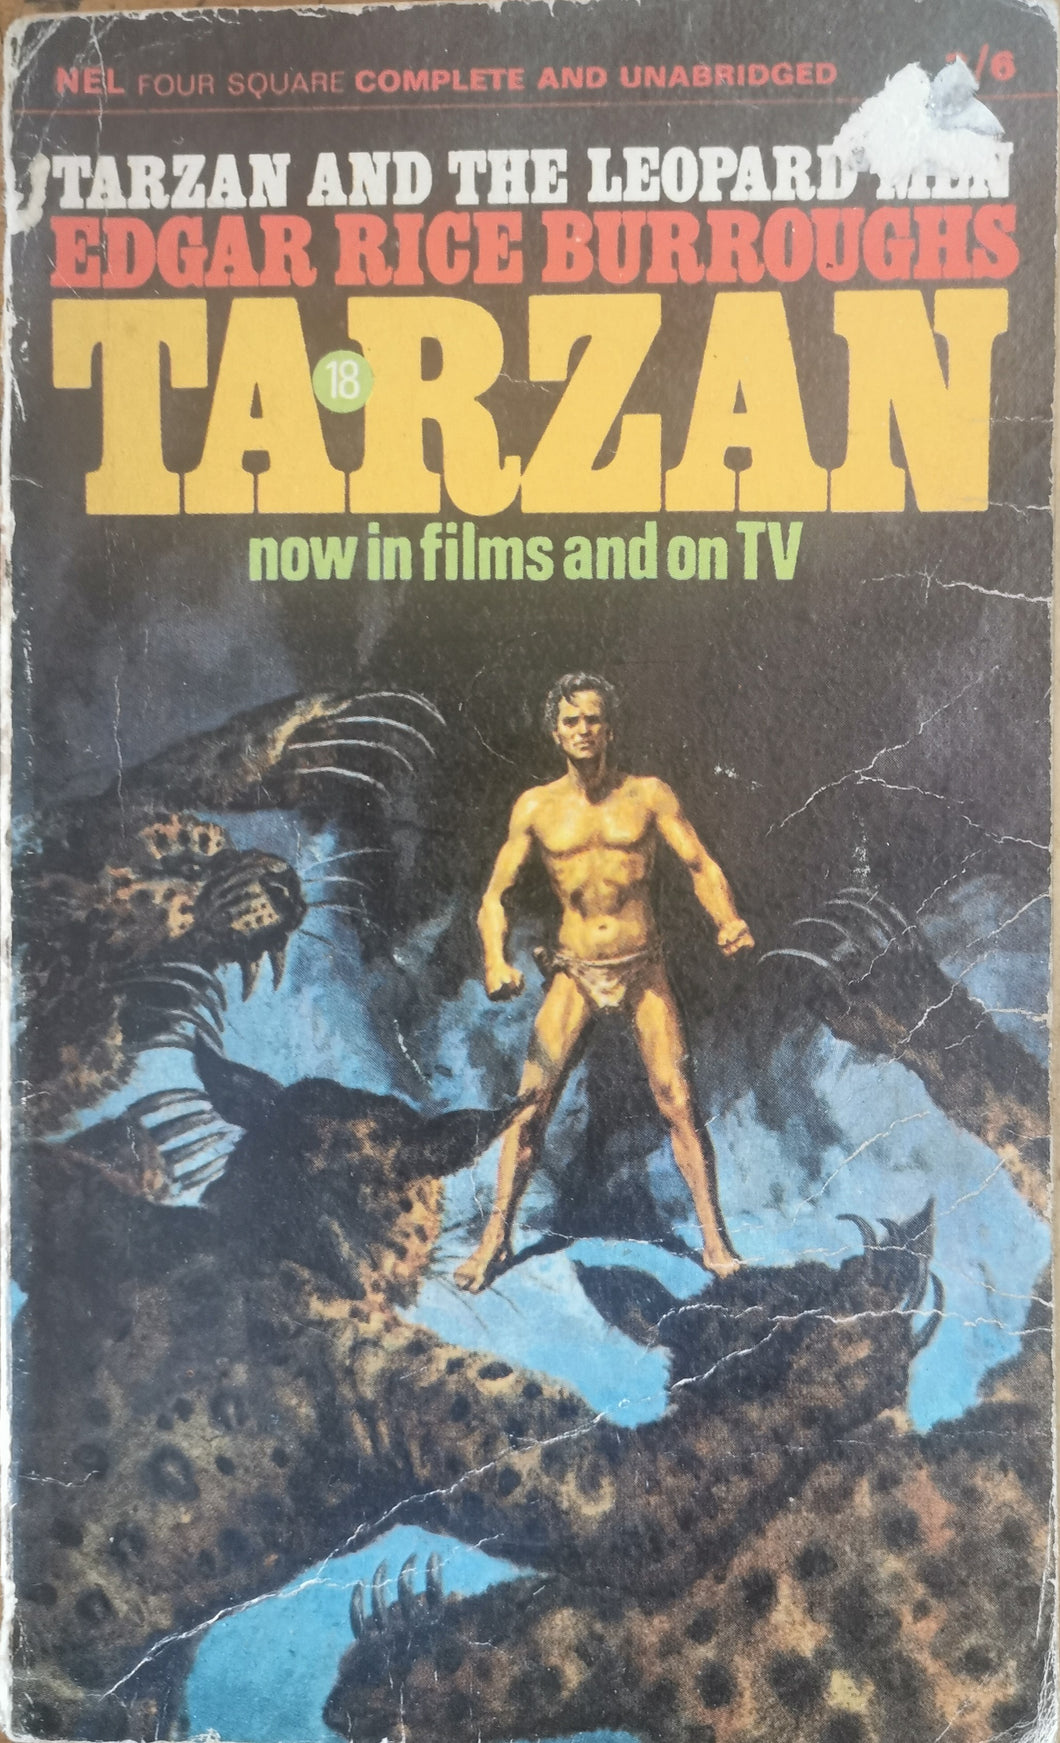 Tarzan and the Leopard Man - Edgar Rice Burroughs